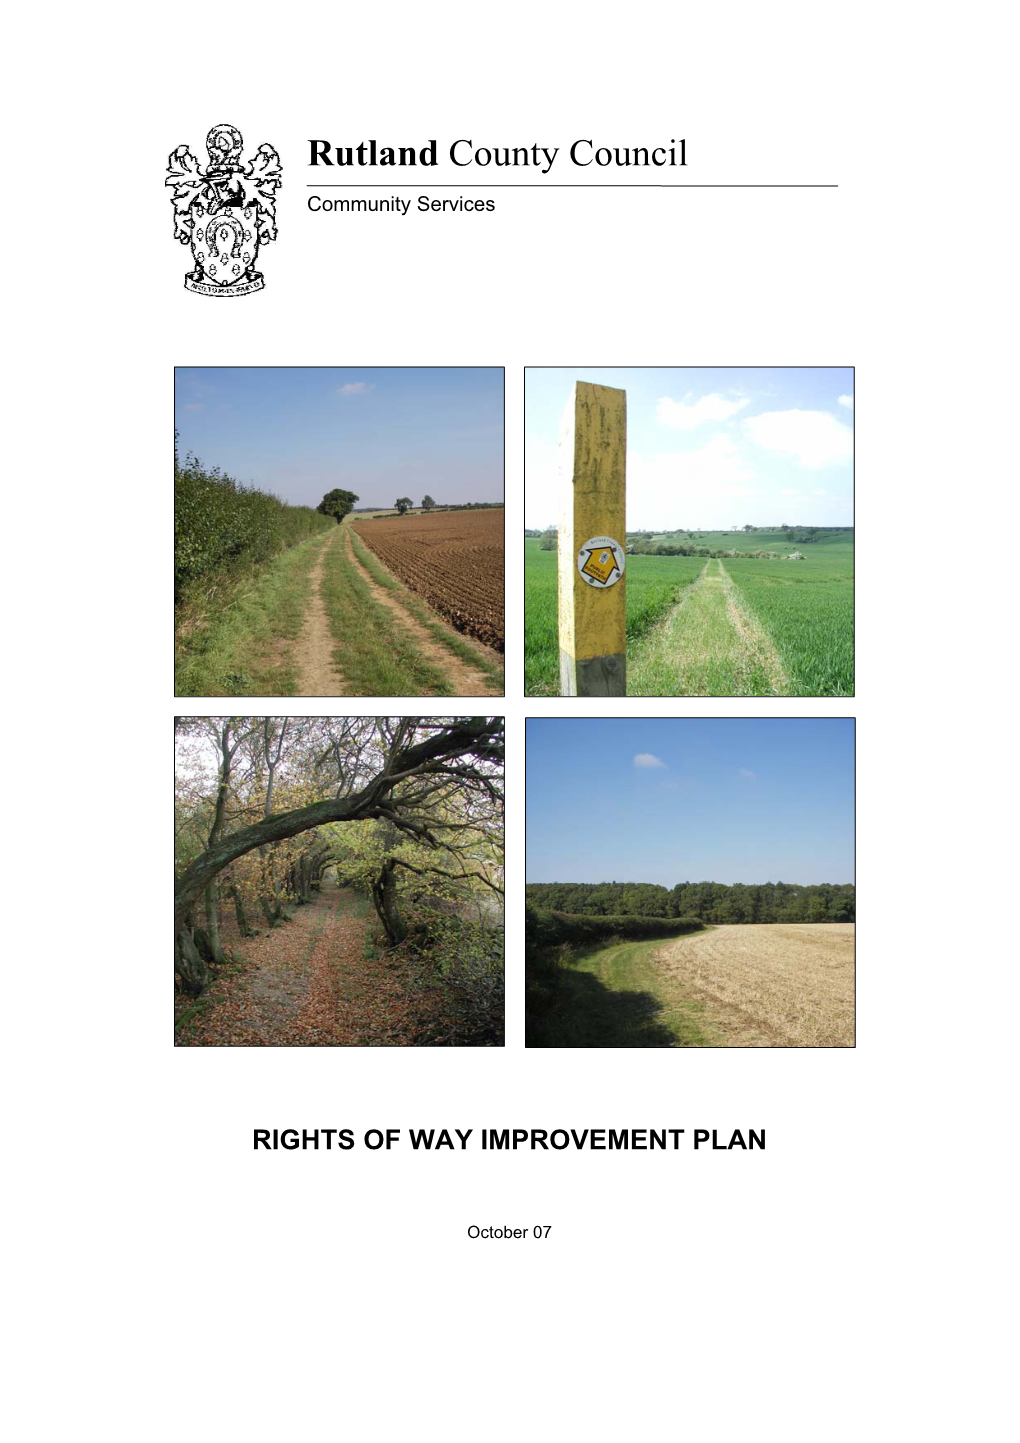 Rutland County Council Rights of Way Improvement Plan 2007